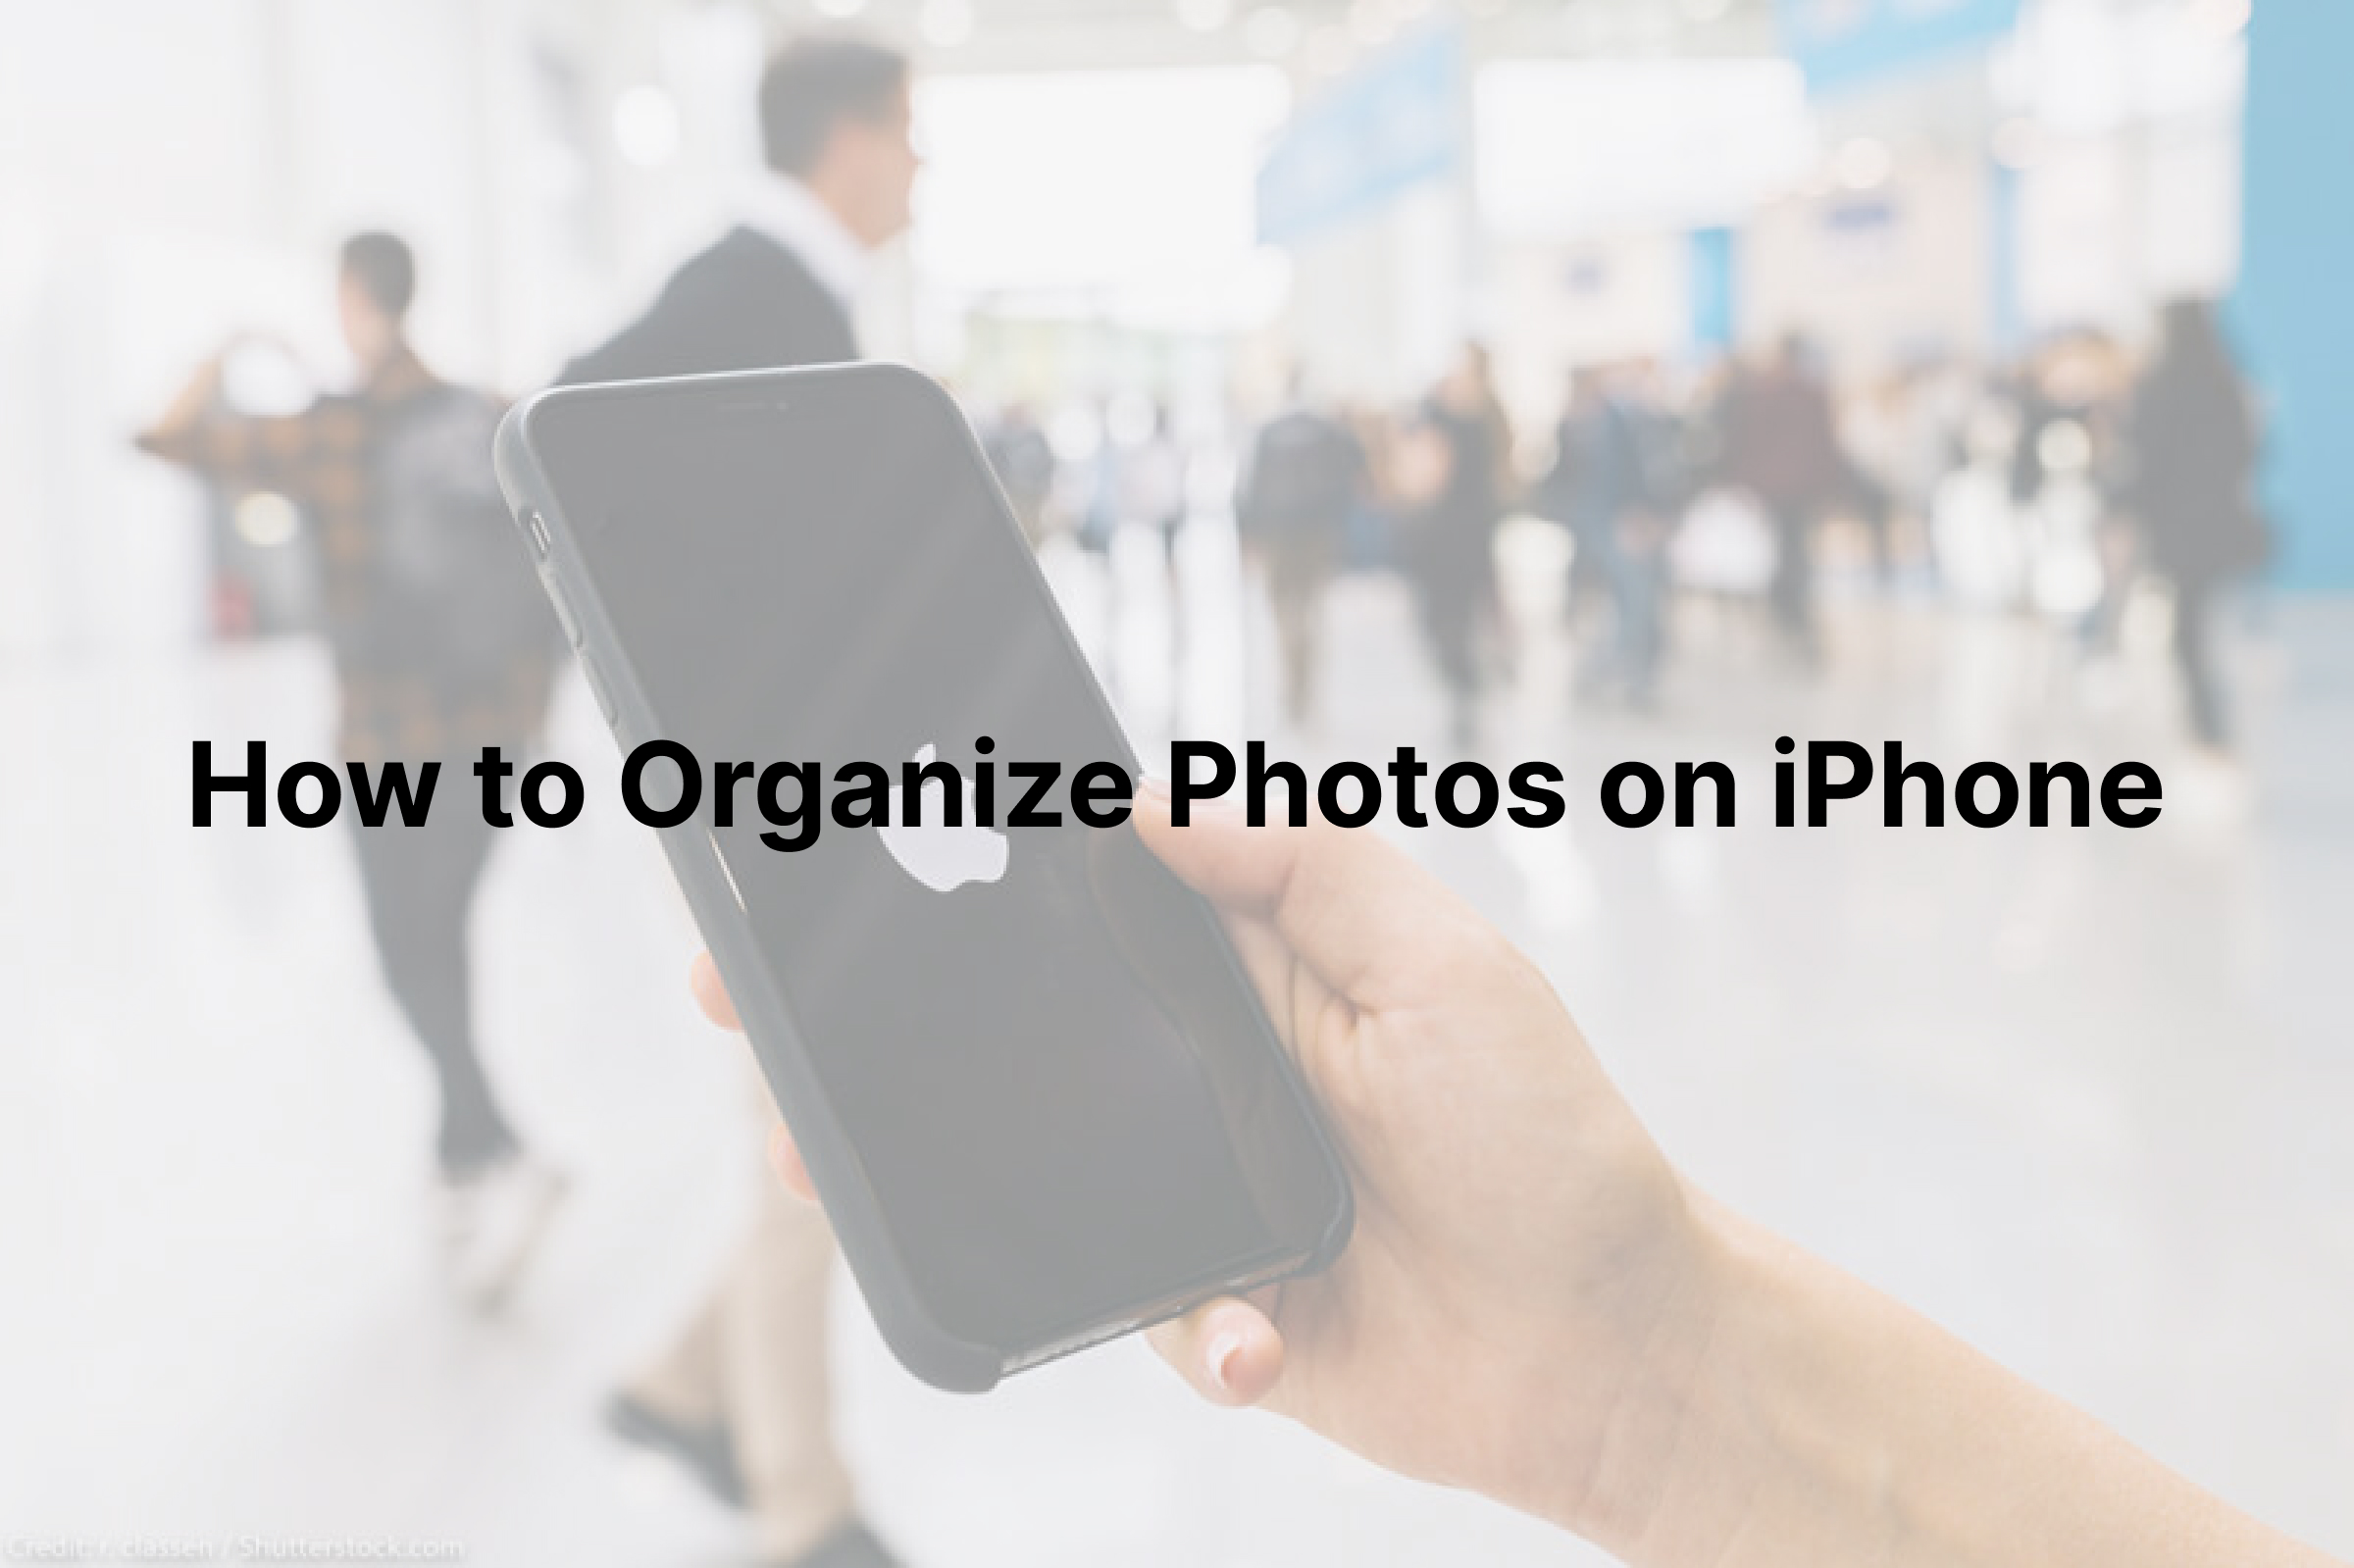 Como organizar fotos no iPhone?